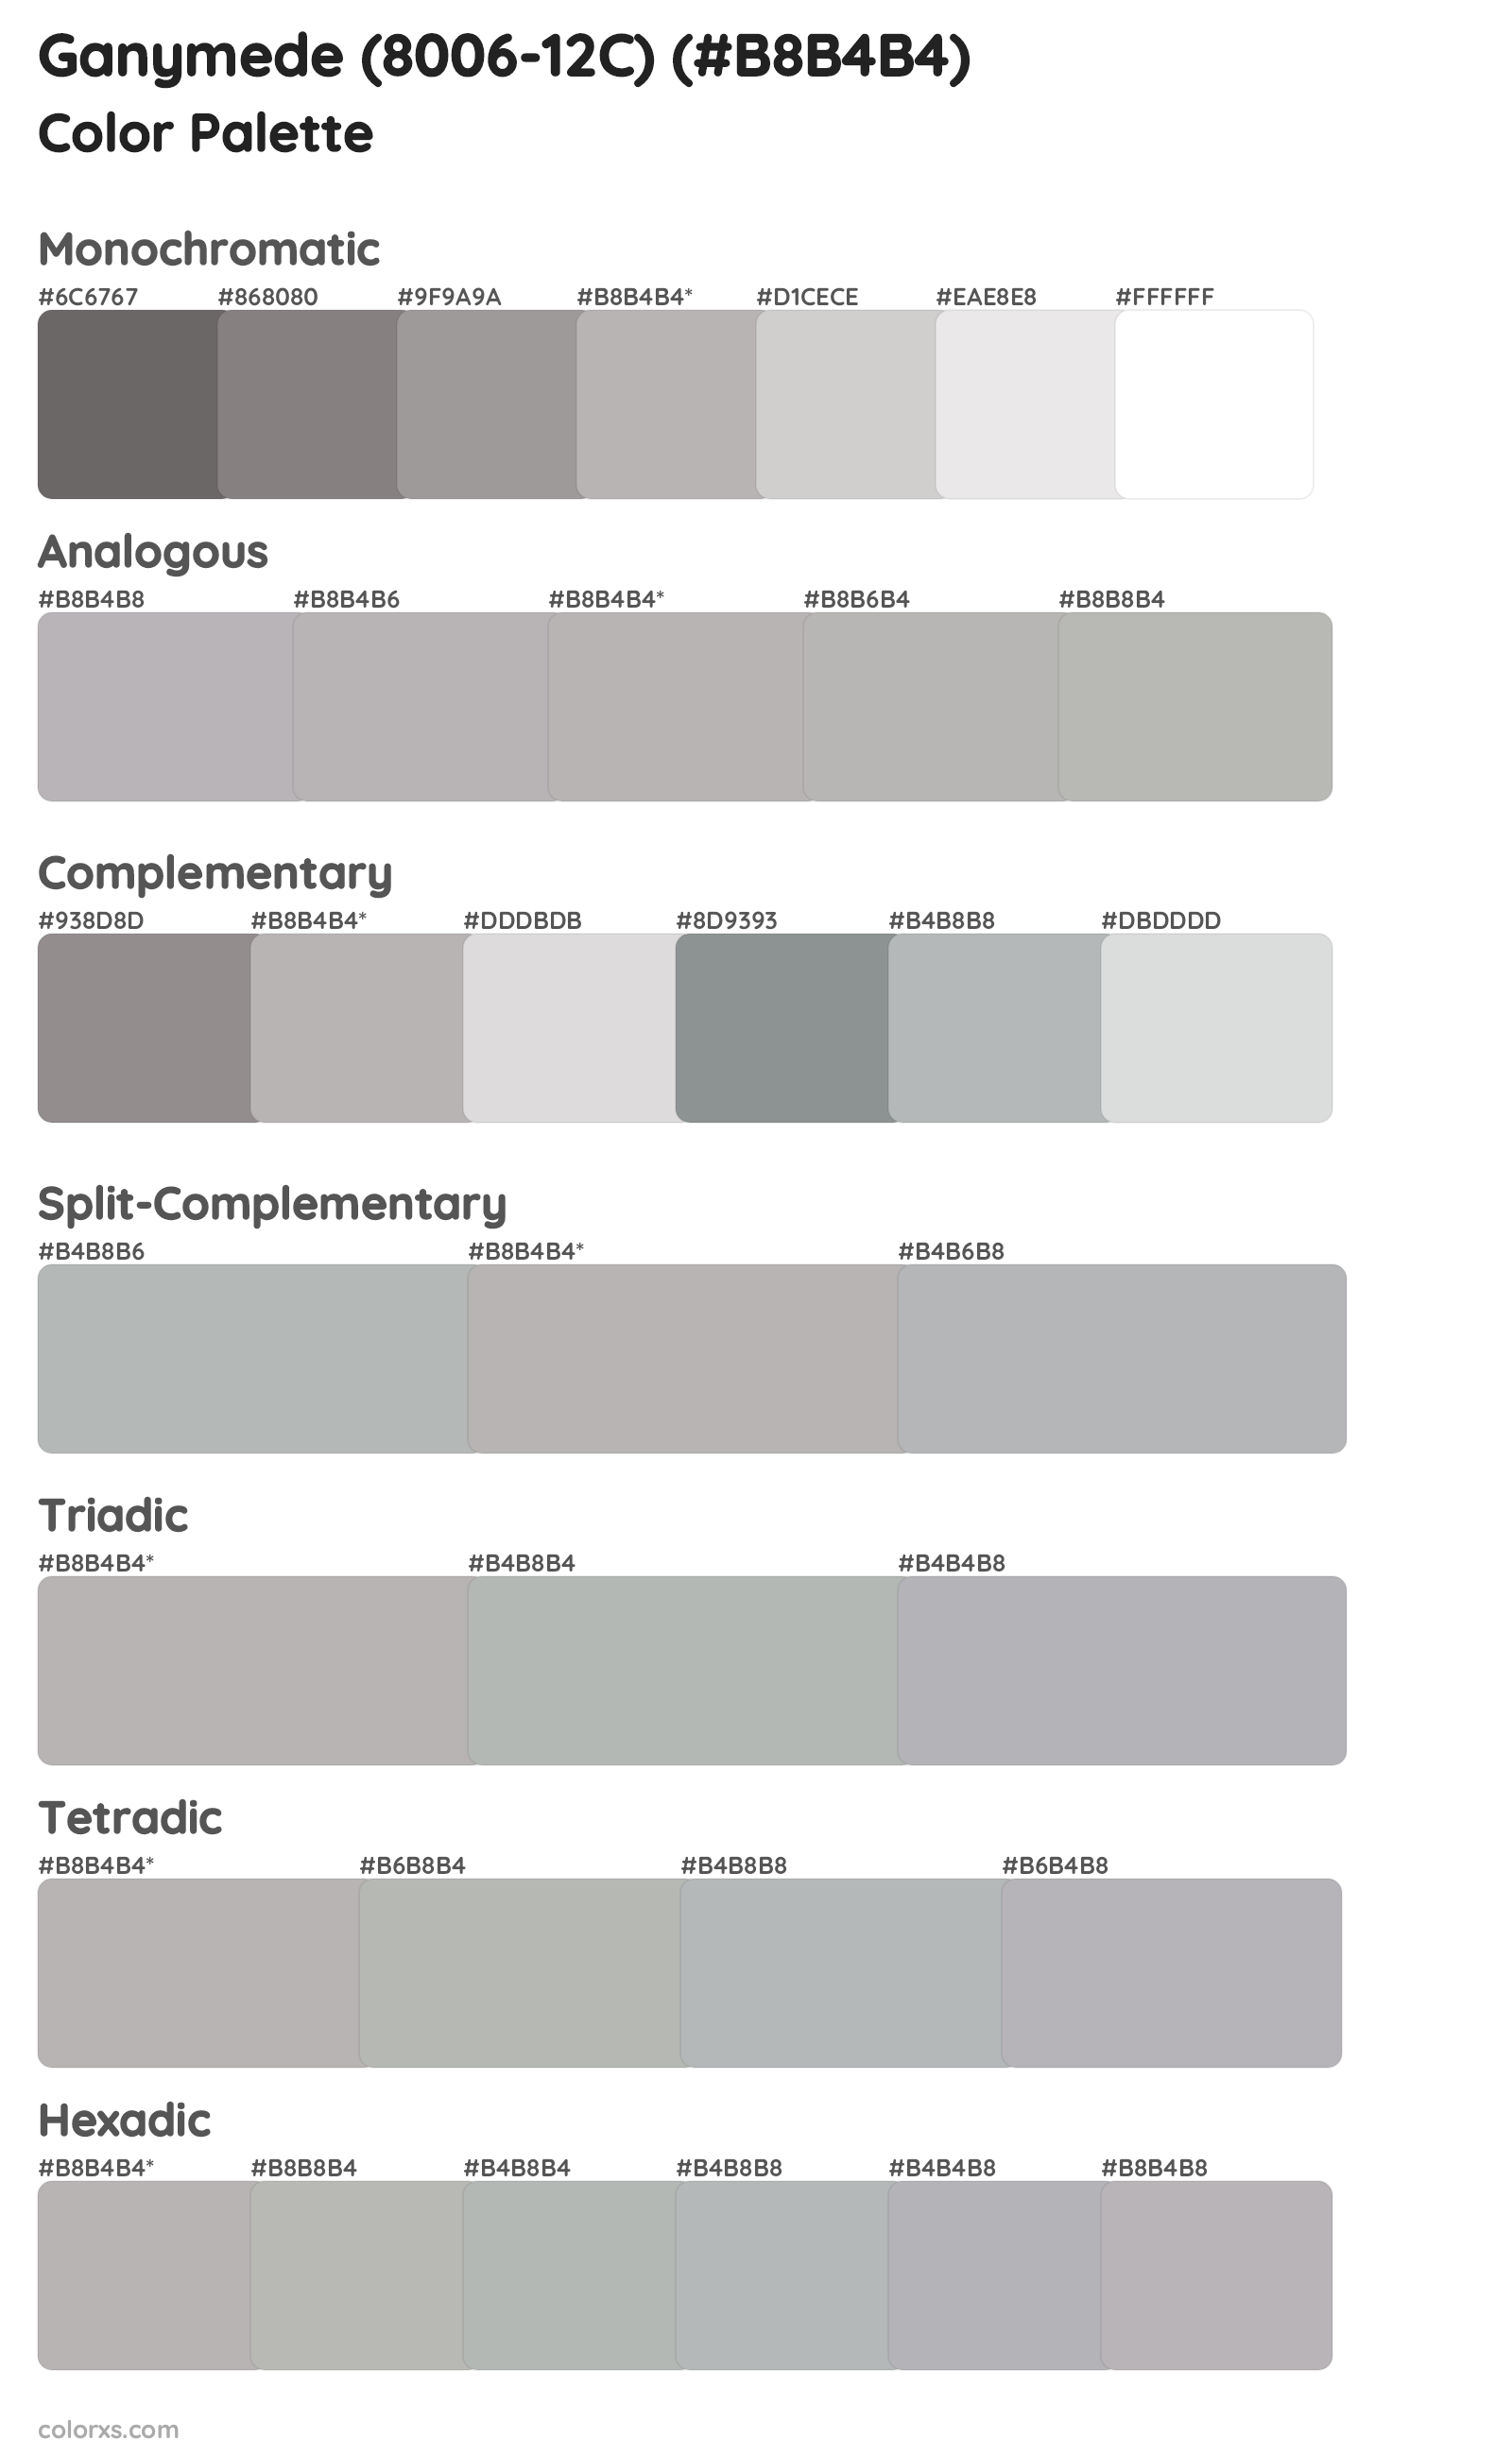 Ganymede (8006-12C) Color Scheme Palettes